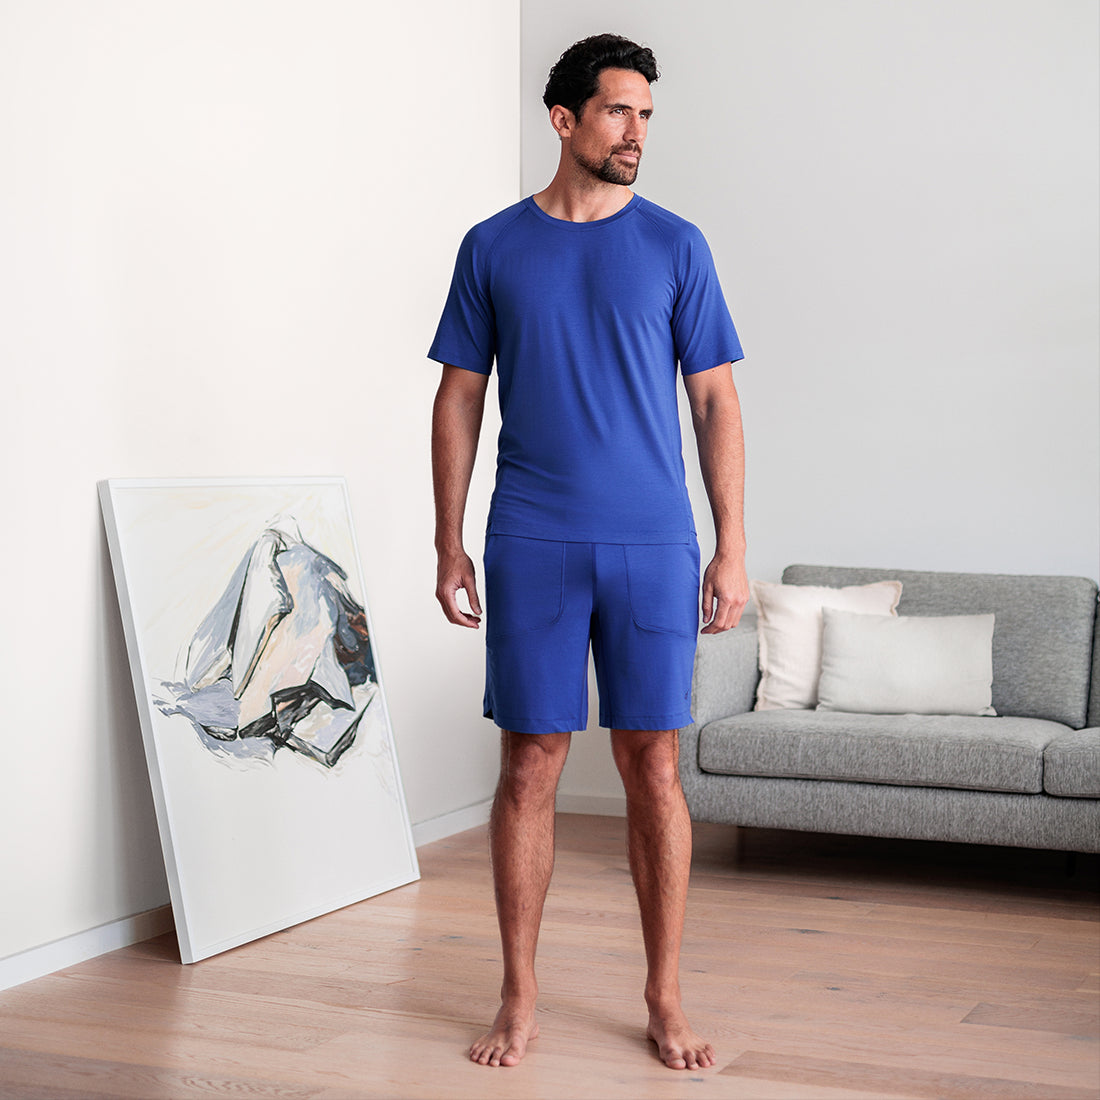 Muscle recovery sleep t-shirt || Azure blue